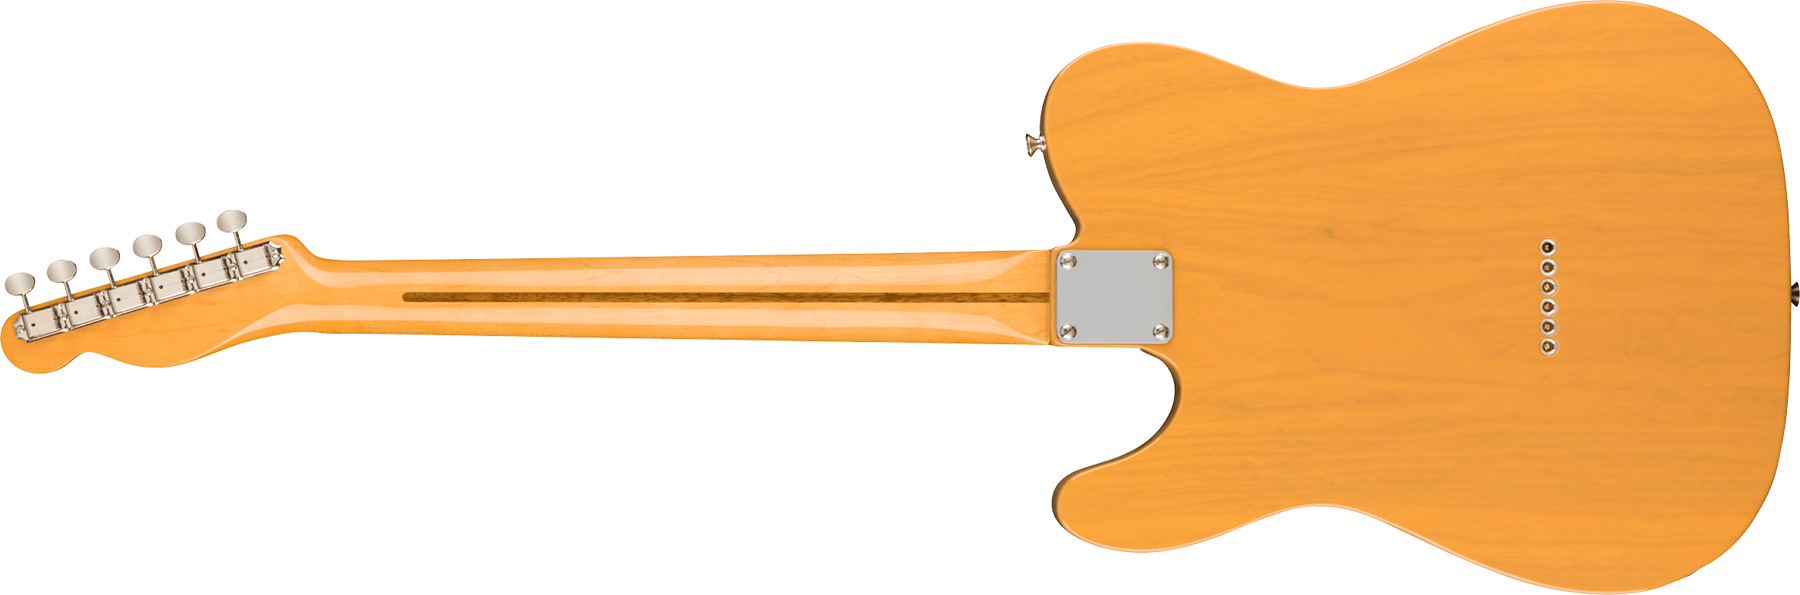 Fender Tele 1951 American Vintage Ii Usa 2s Ht Mn - Butterscotch Blonde - E-Gitarre in Teleform - Variation 1